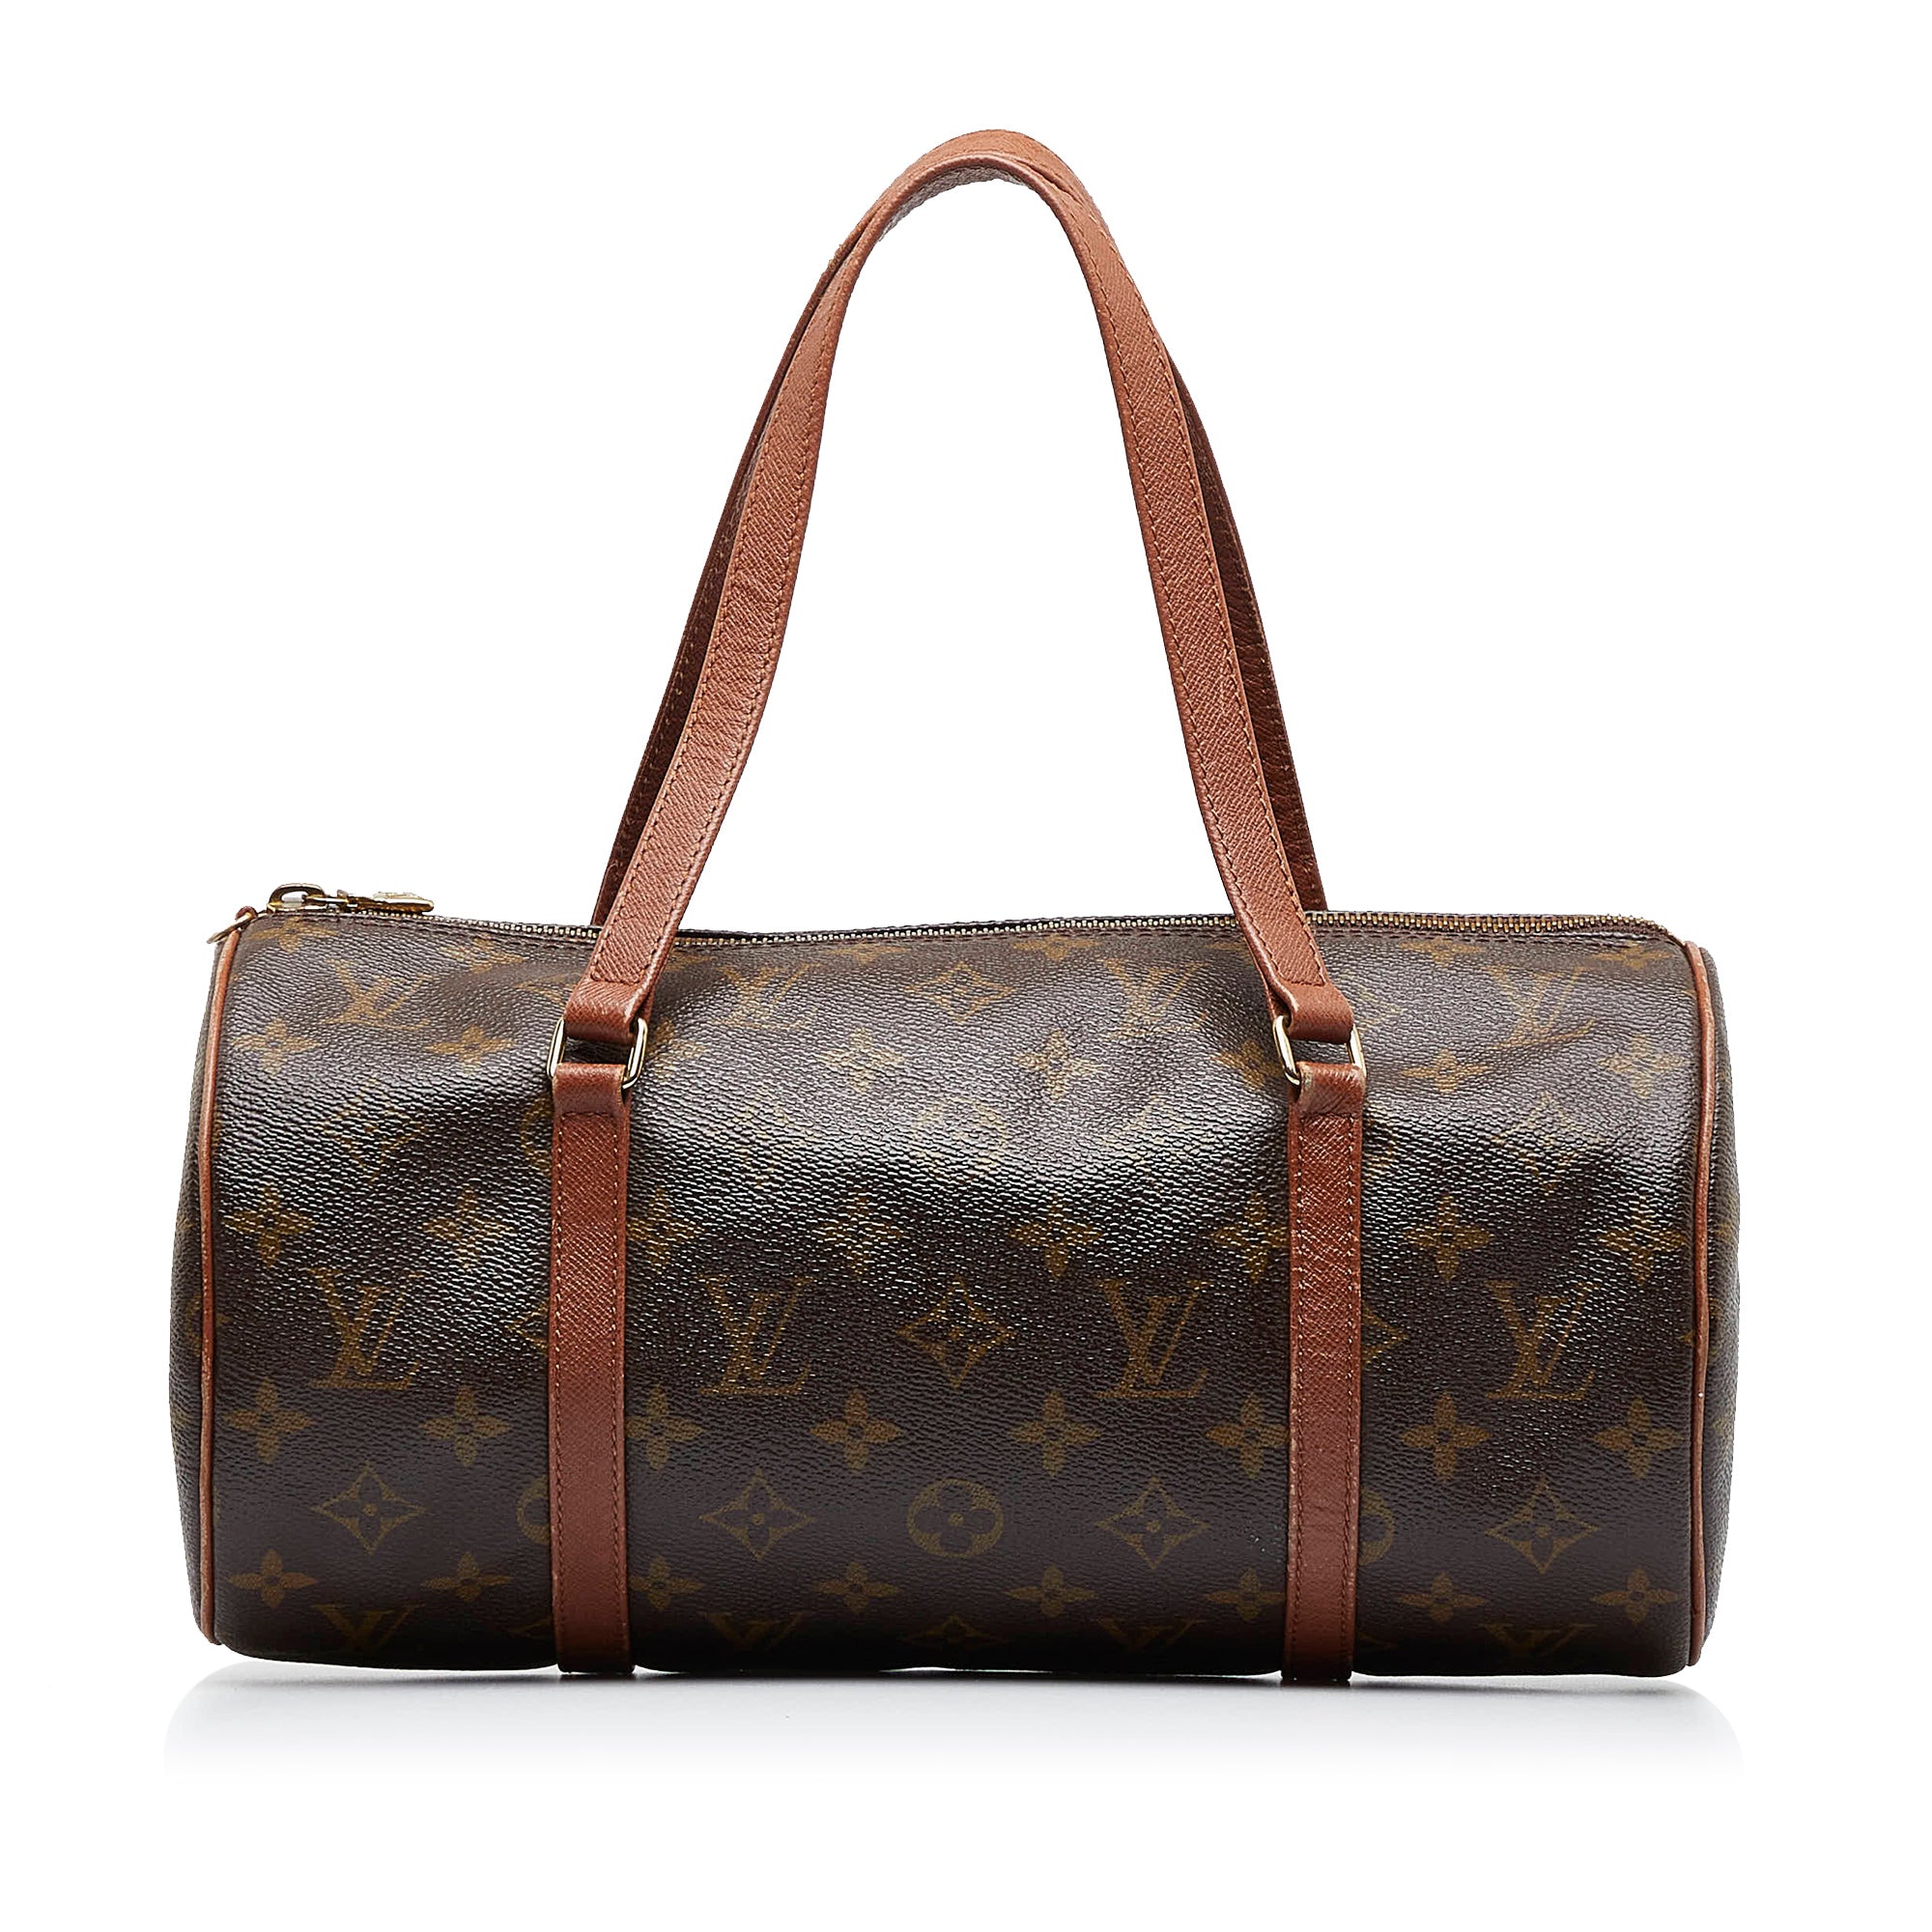 Louis Vuitton Mini Tasche Sales Tax